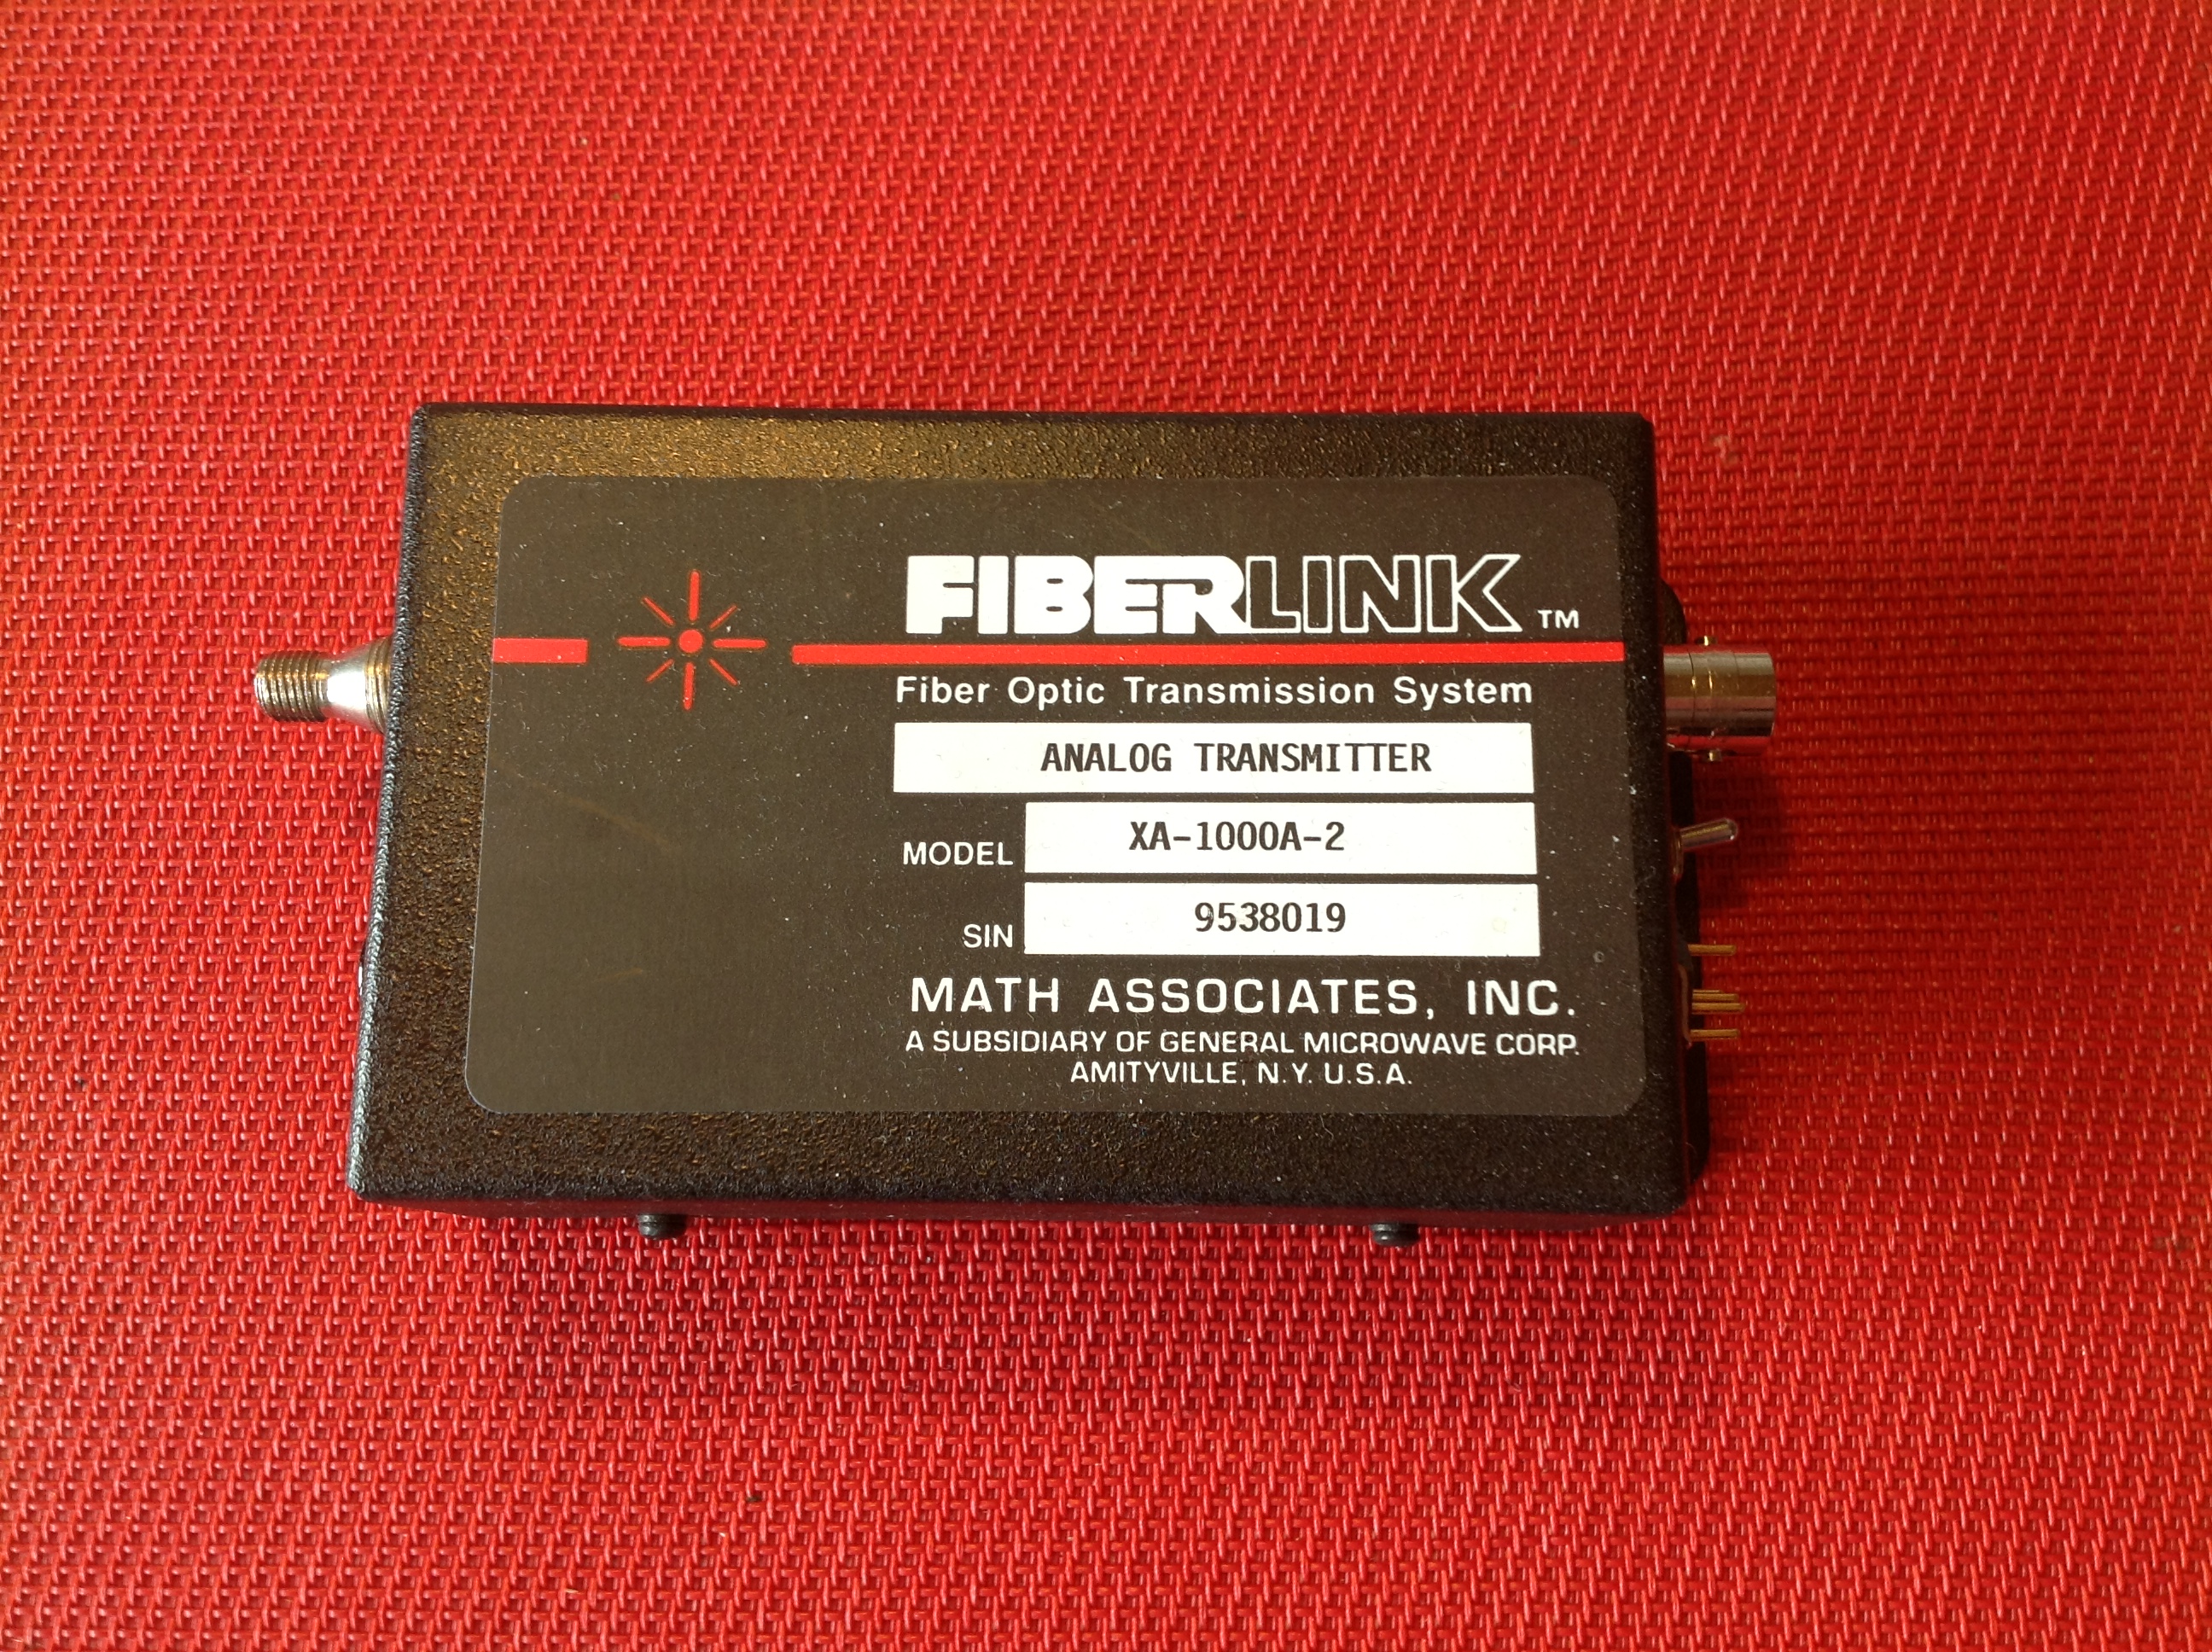 Fiber Link Analog Transmitter Model XA-1000A-2